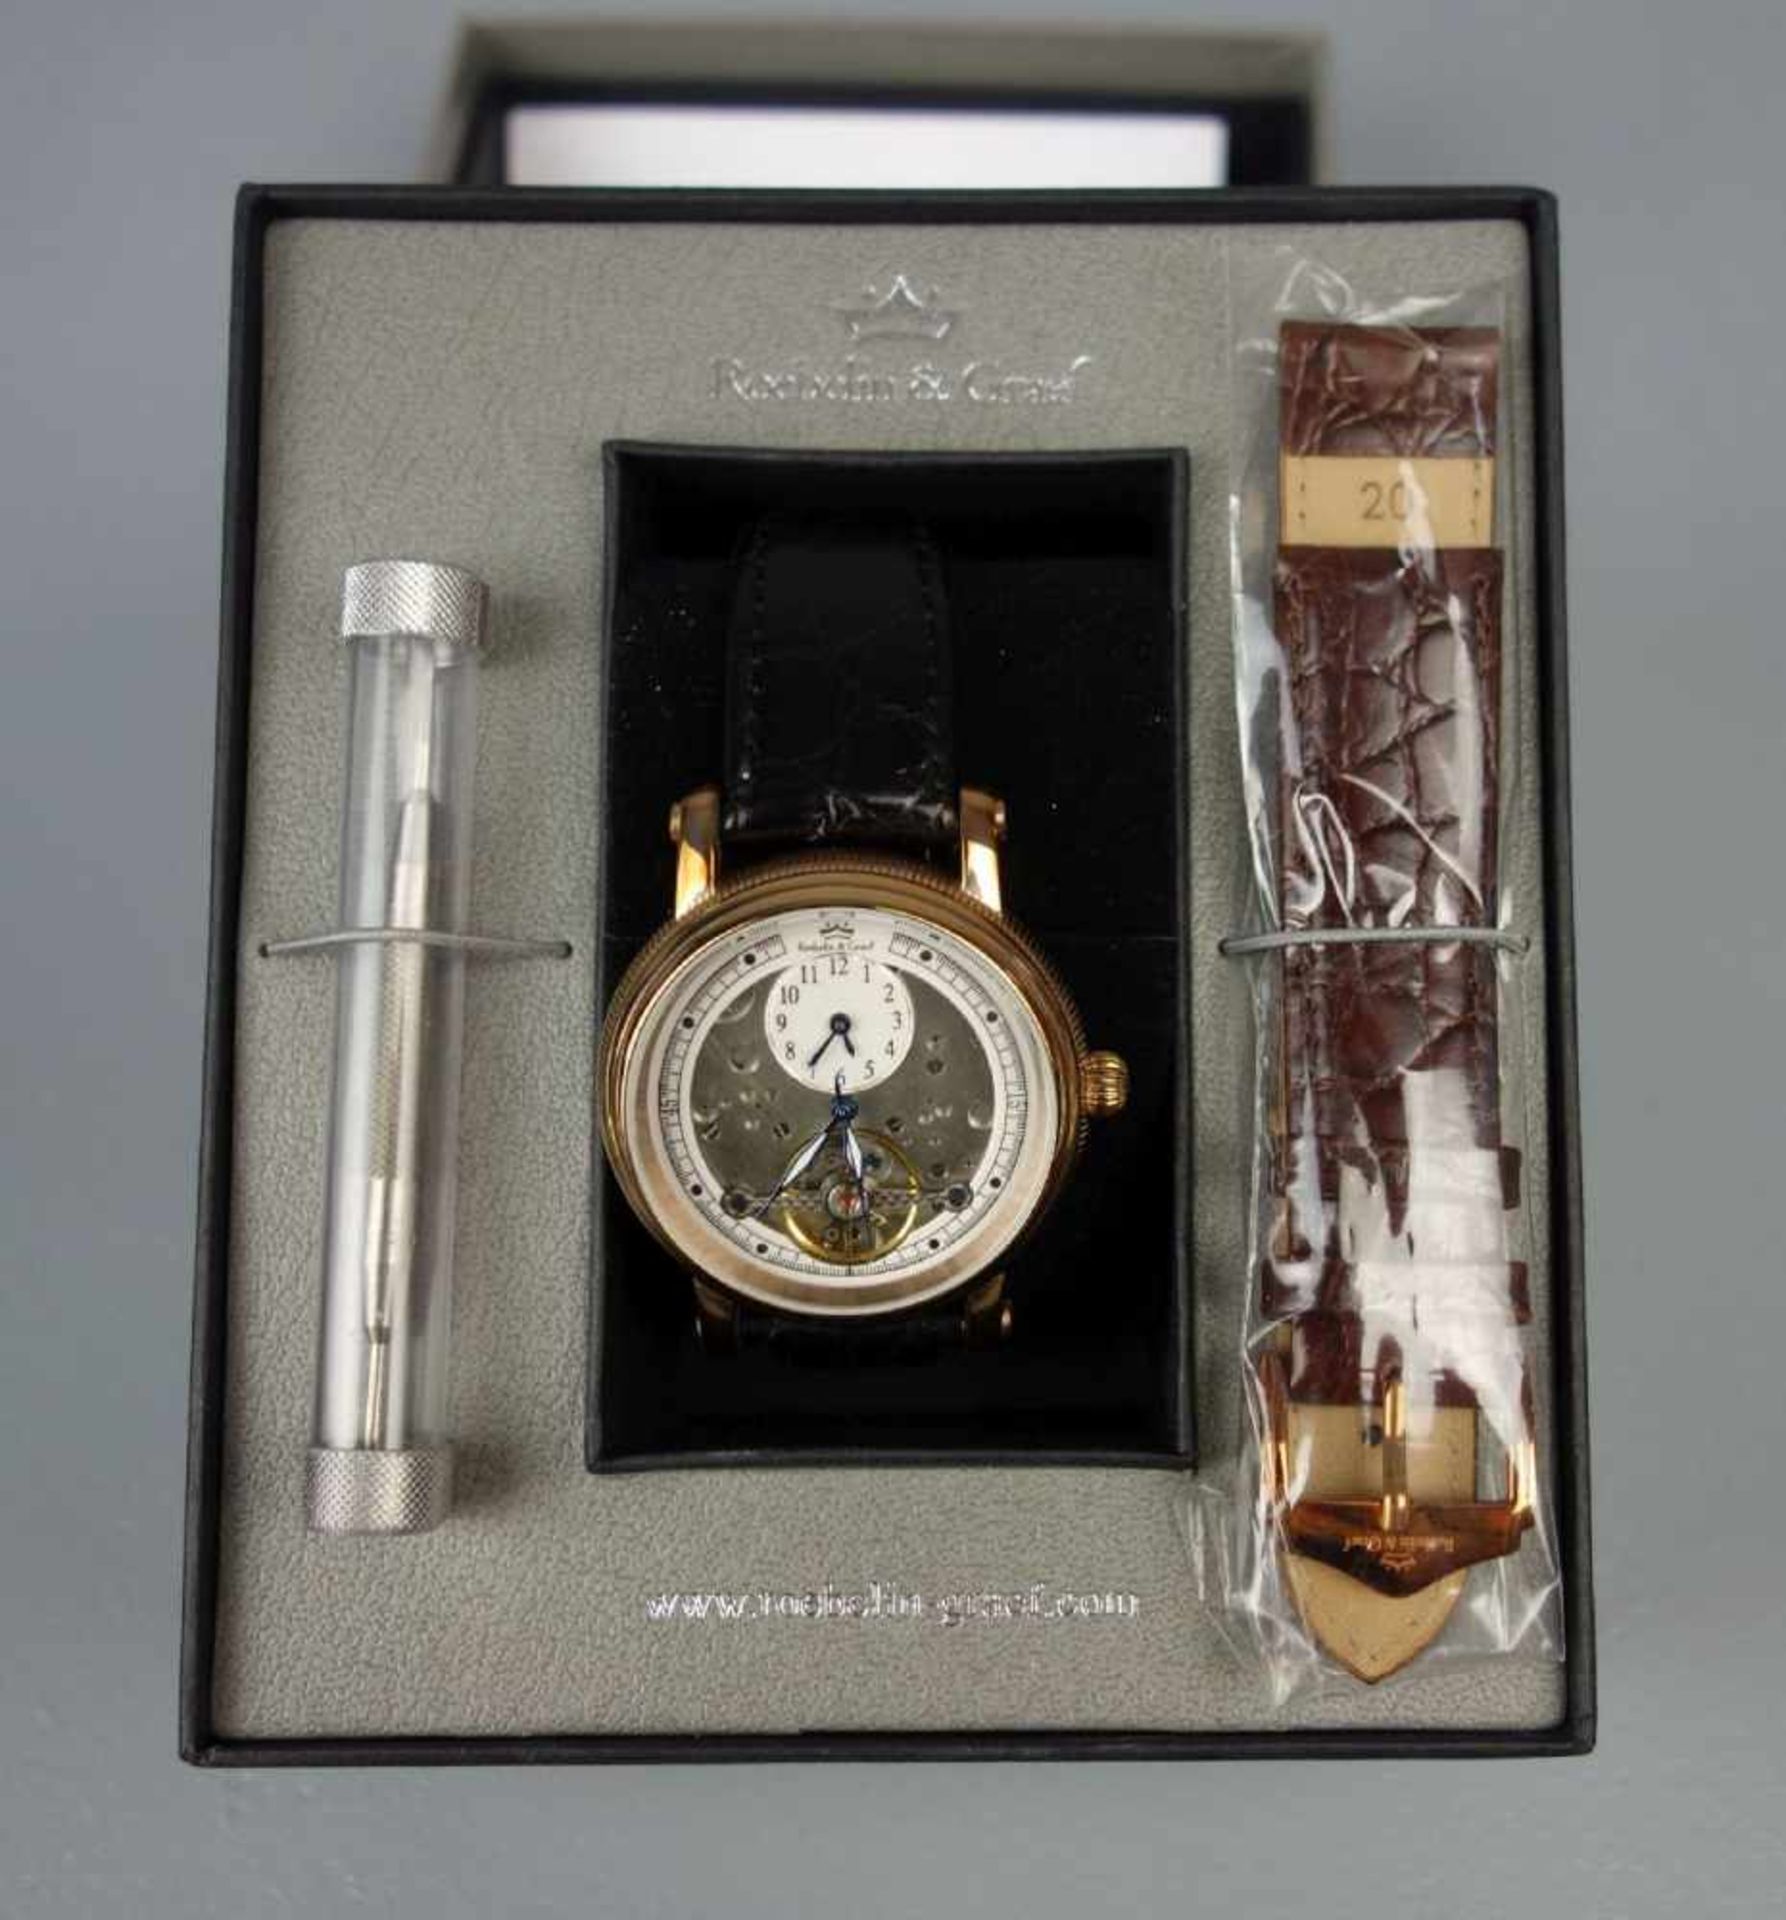 ARMBANDUHR ROEBELIN & GRAEF / wristwatch, Automatik-Uhr, Modell "Pharao". Rundes Edelstahlgehäuse in